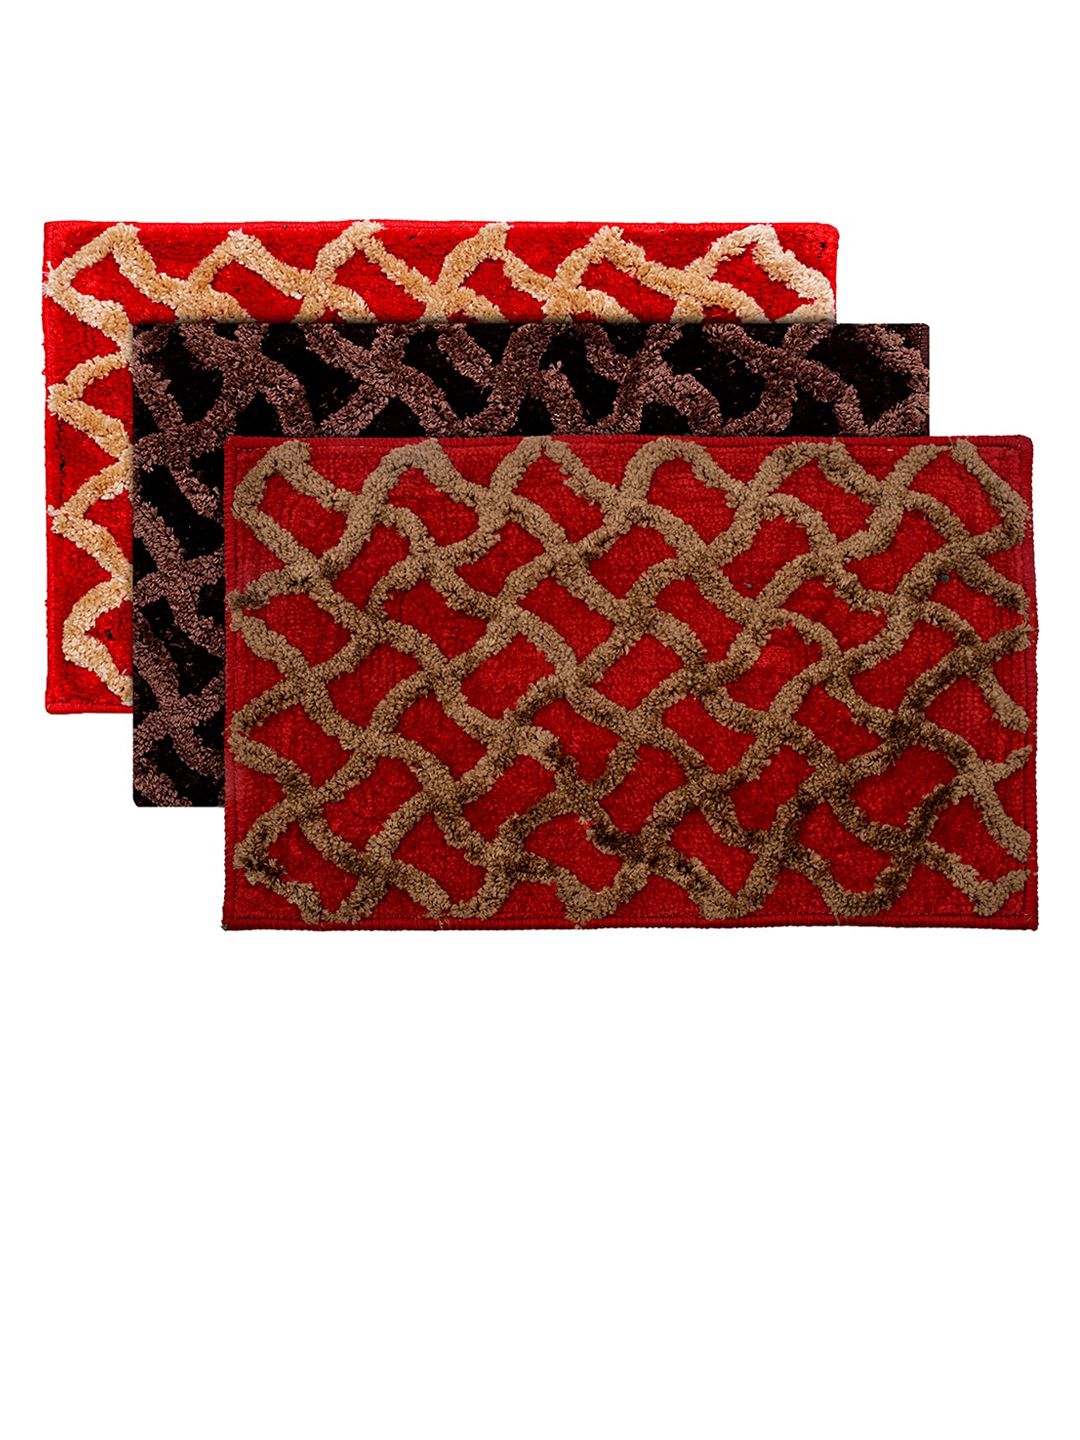 Kuber Industries Set Of 3 Brown & Red Patterned Anti-Skid Doormats Price in India